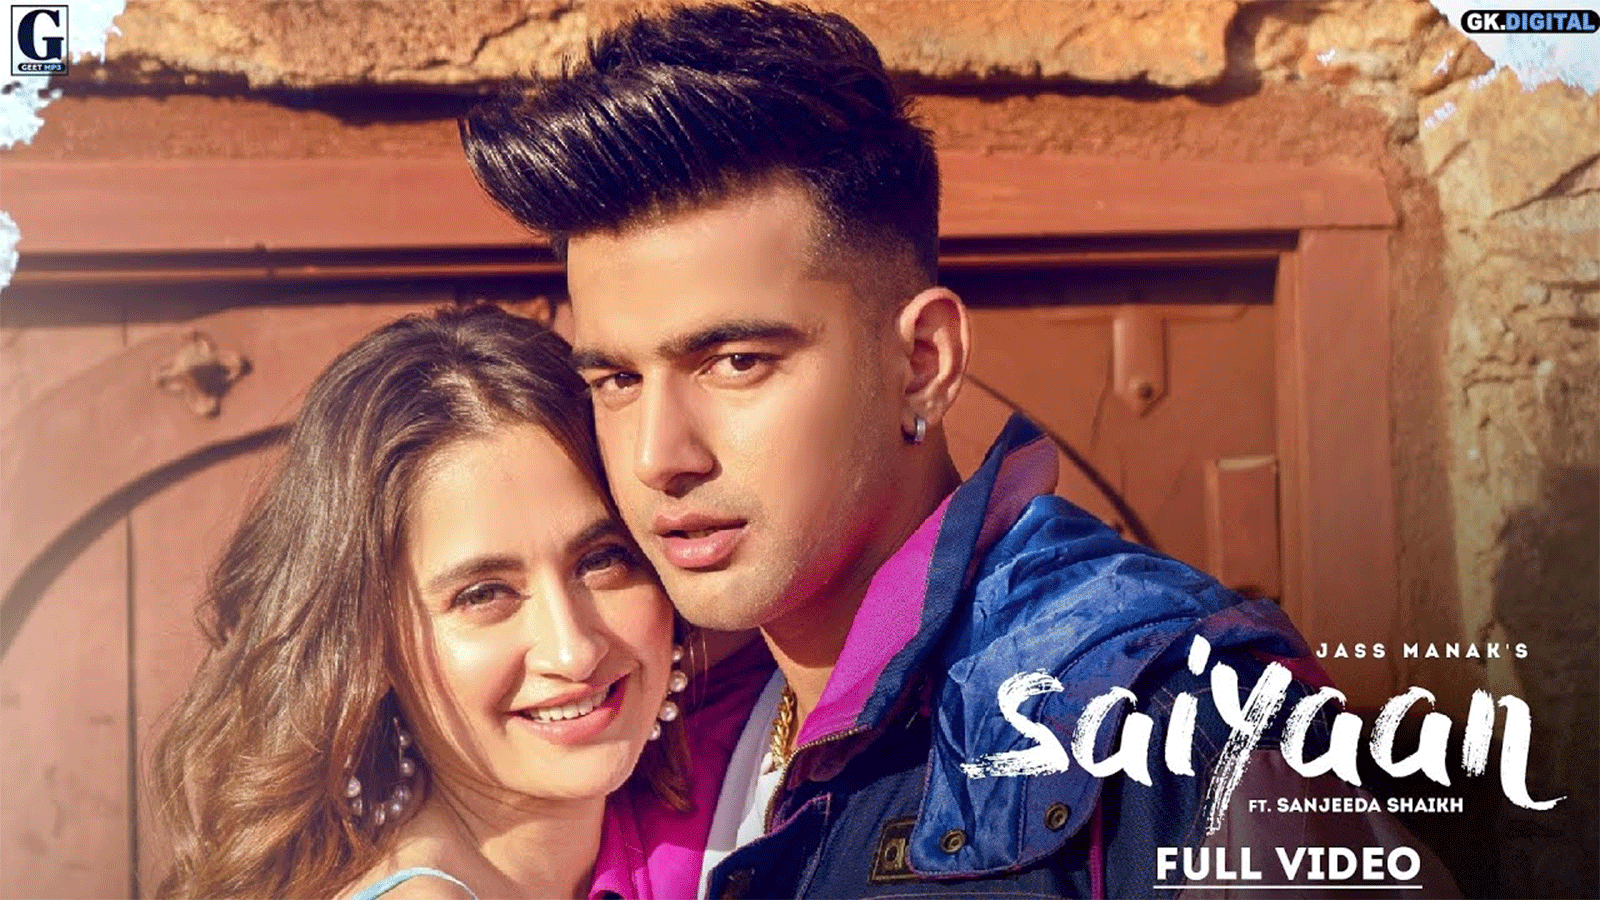 Watch Latest 2021 Punjabi Song 'Saiyaan' Sung By Jass Manak | Punjabi Video  Songs - Times of India